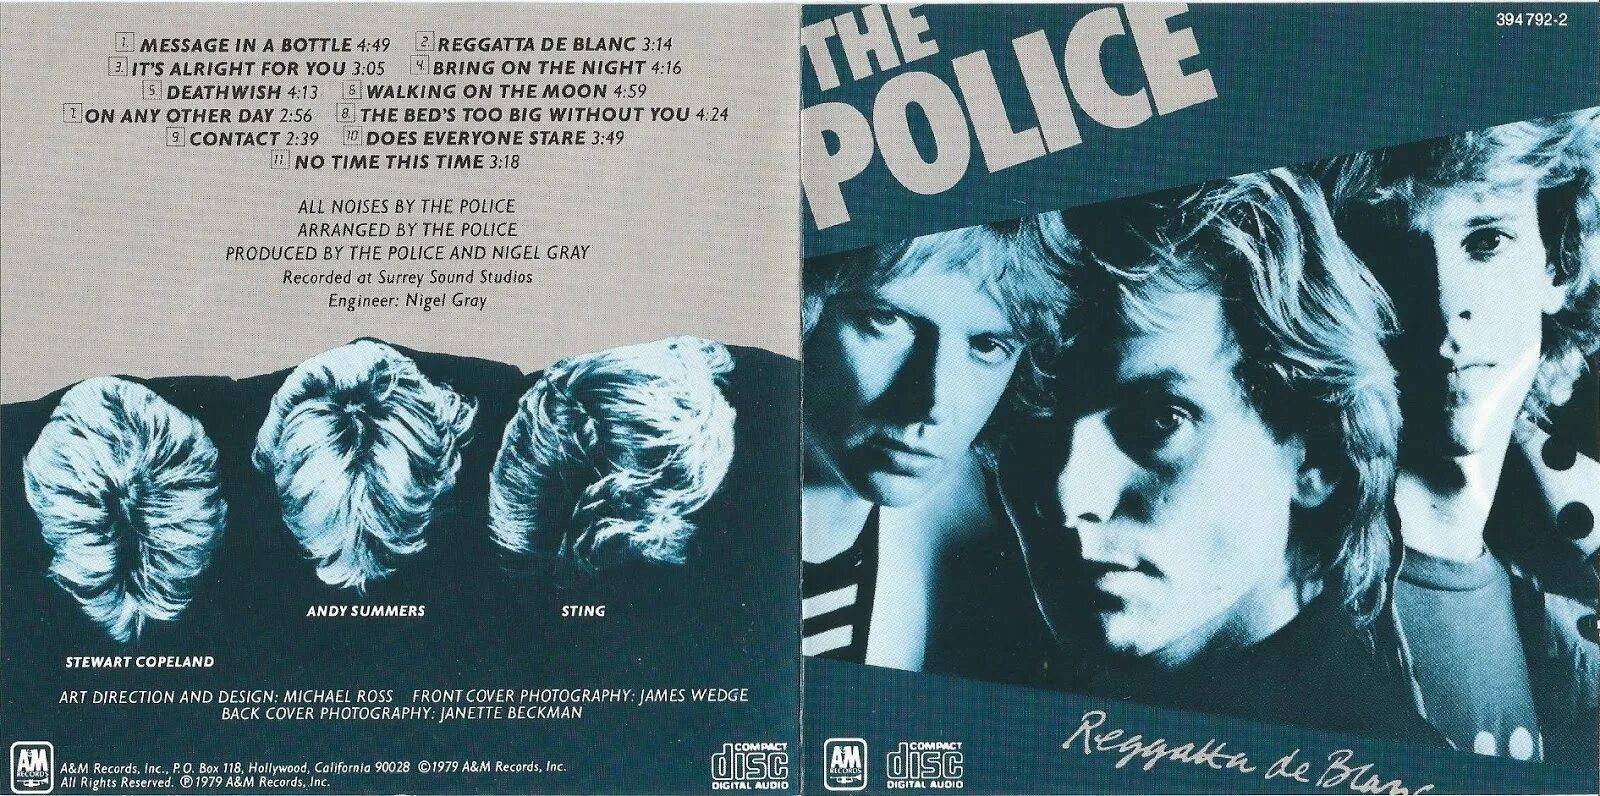 The police message. The Police - 1979 - Reggatta de Blanc. The Police - Reggatta de Blanc (1979) CD. Police "Reggatta de Blanc". The Police 1979.